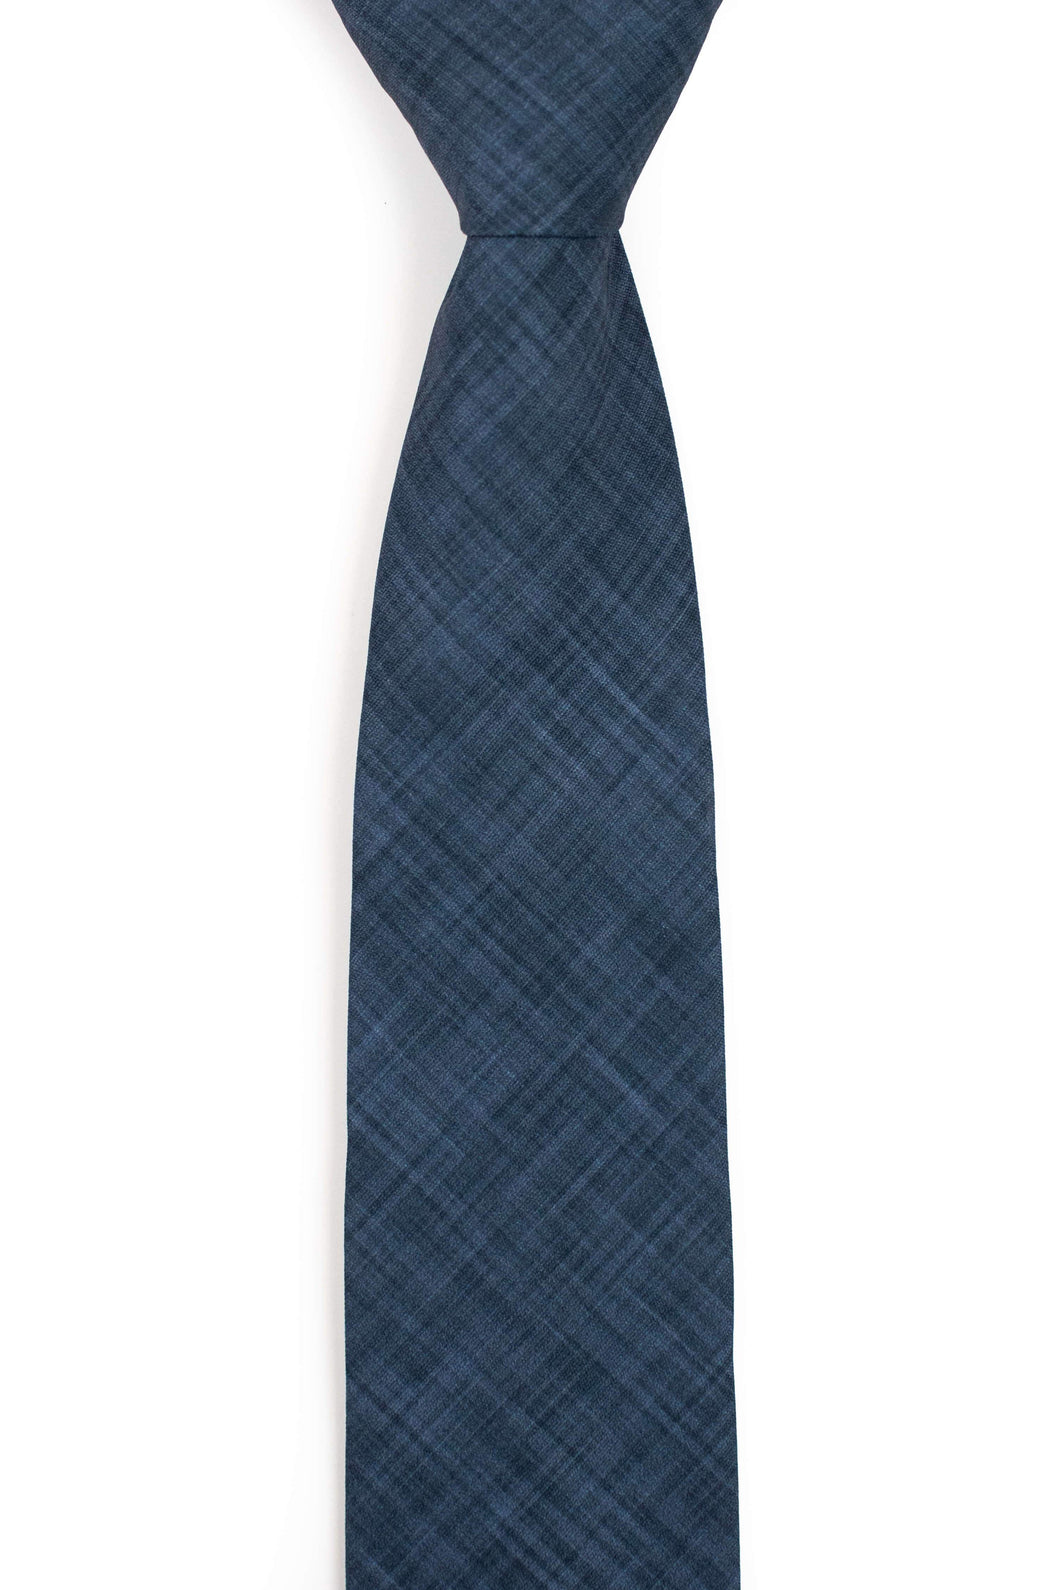 Cobalt missionary tie